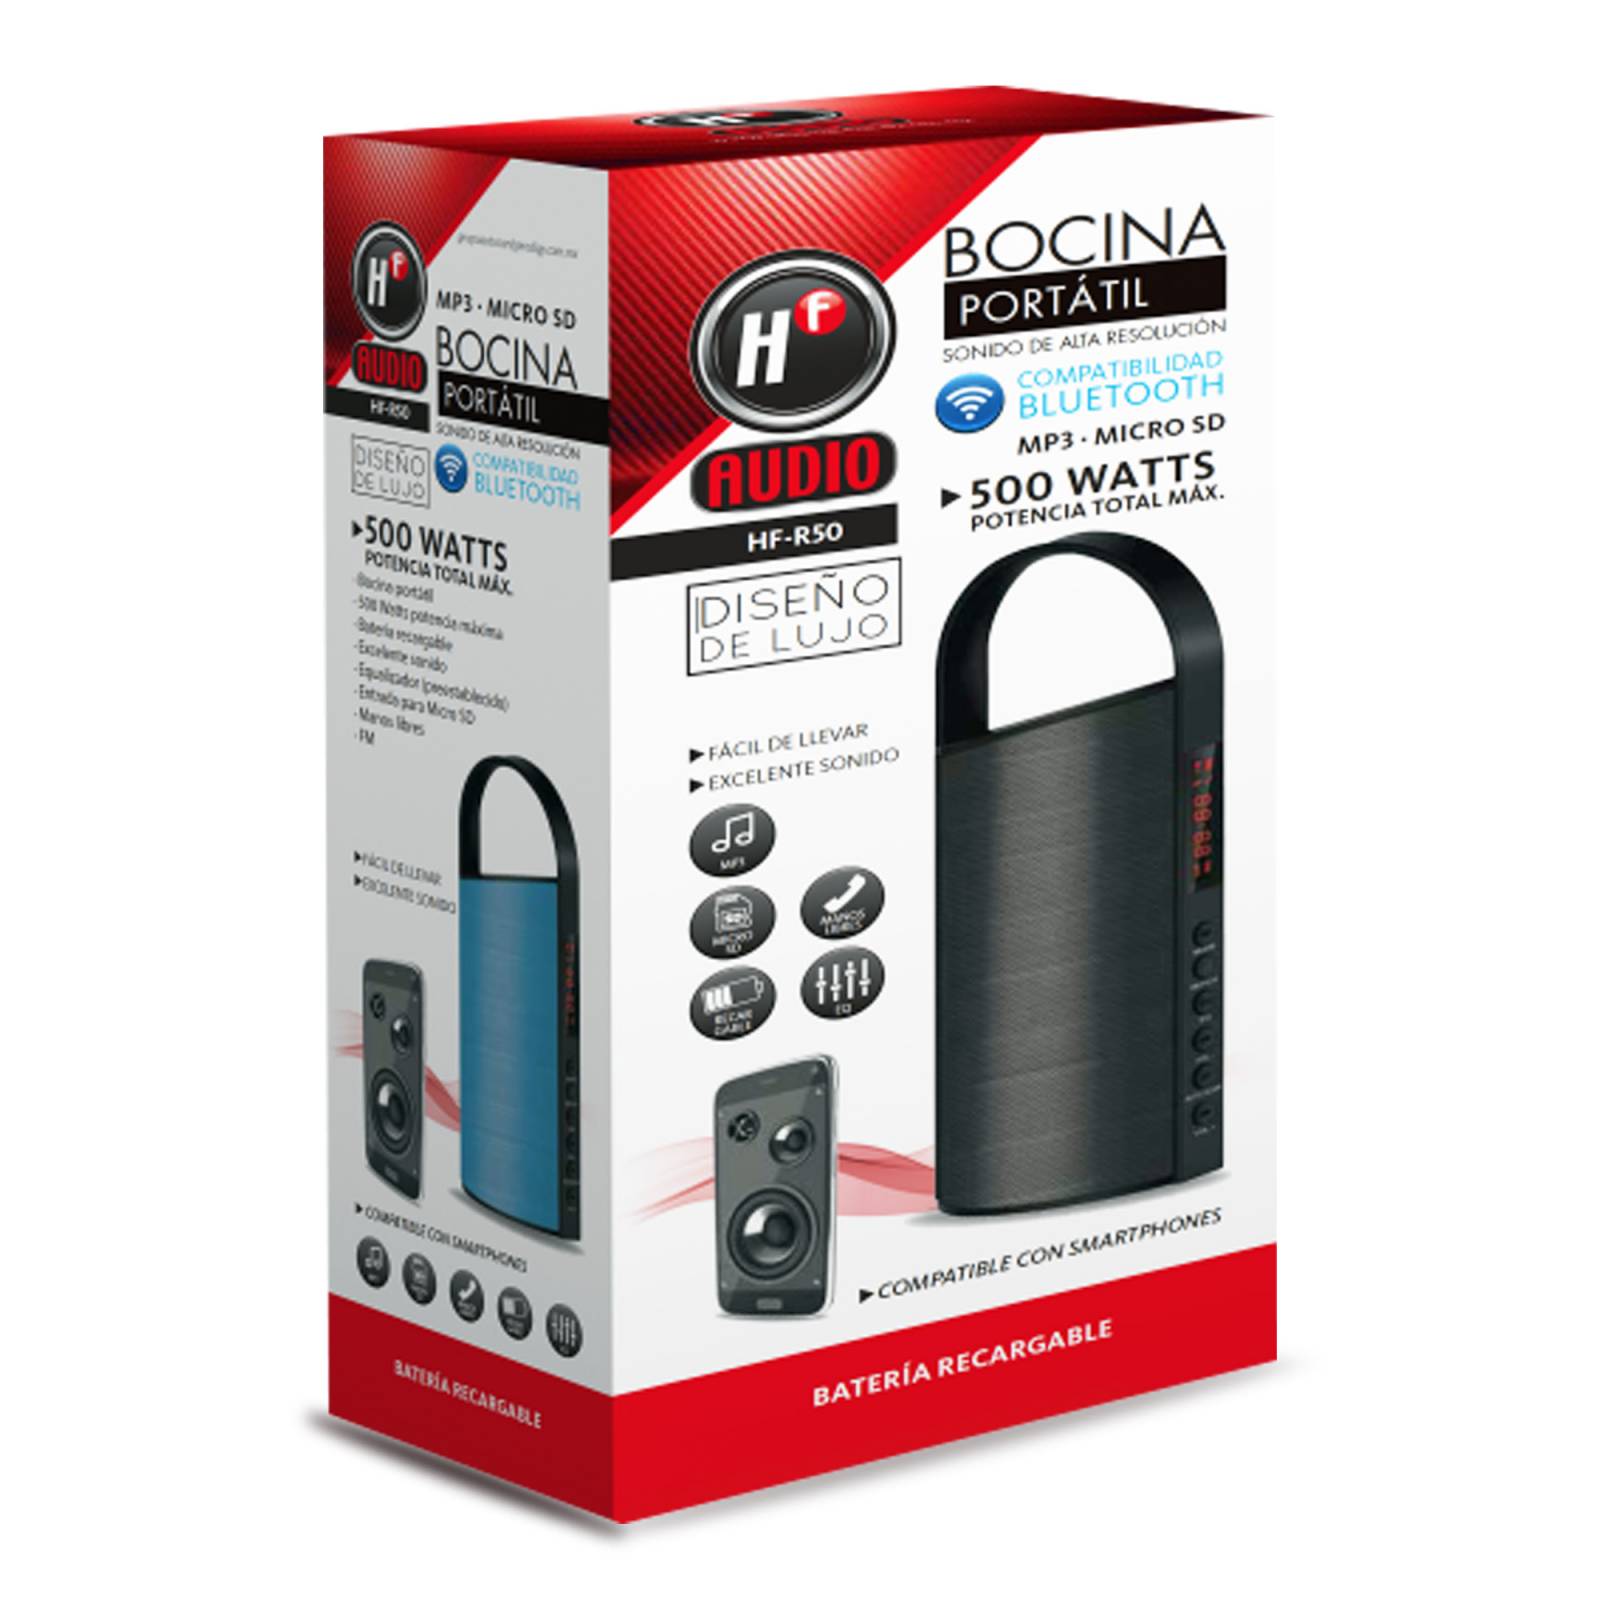 Bocina Portatil Con Bluetooth Marca HF Audio Hf-r50